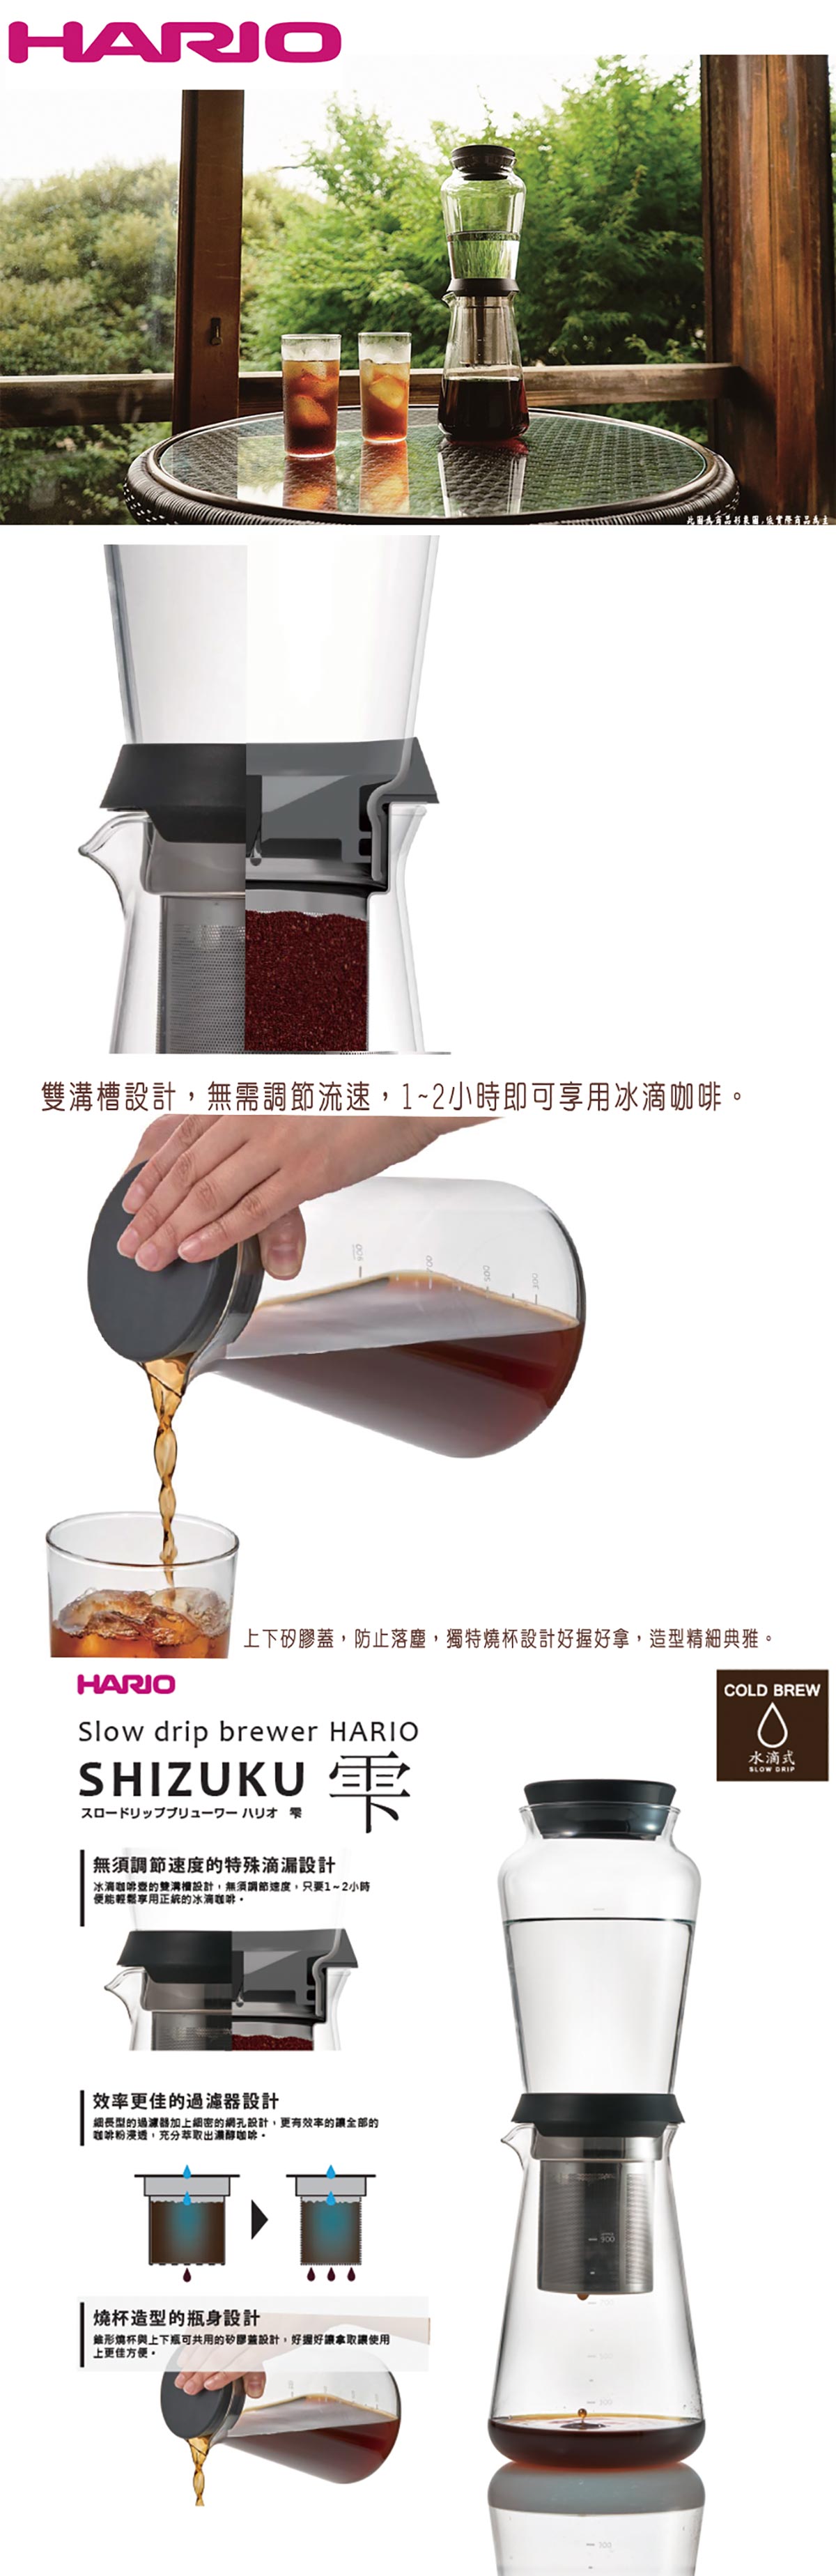 Hario冰滴咖啡壺套組，產地日本具有特殊滴漏設計，燒杯造型，耐熱攝氏 120 度，細密不鏽鋼過濾器，包裝內含咖啡壺 600 毫升 x 一入  ，玻璃杯 360 毫升 x 兩入。